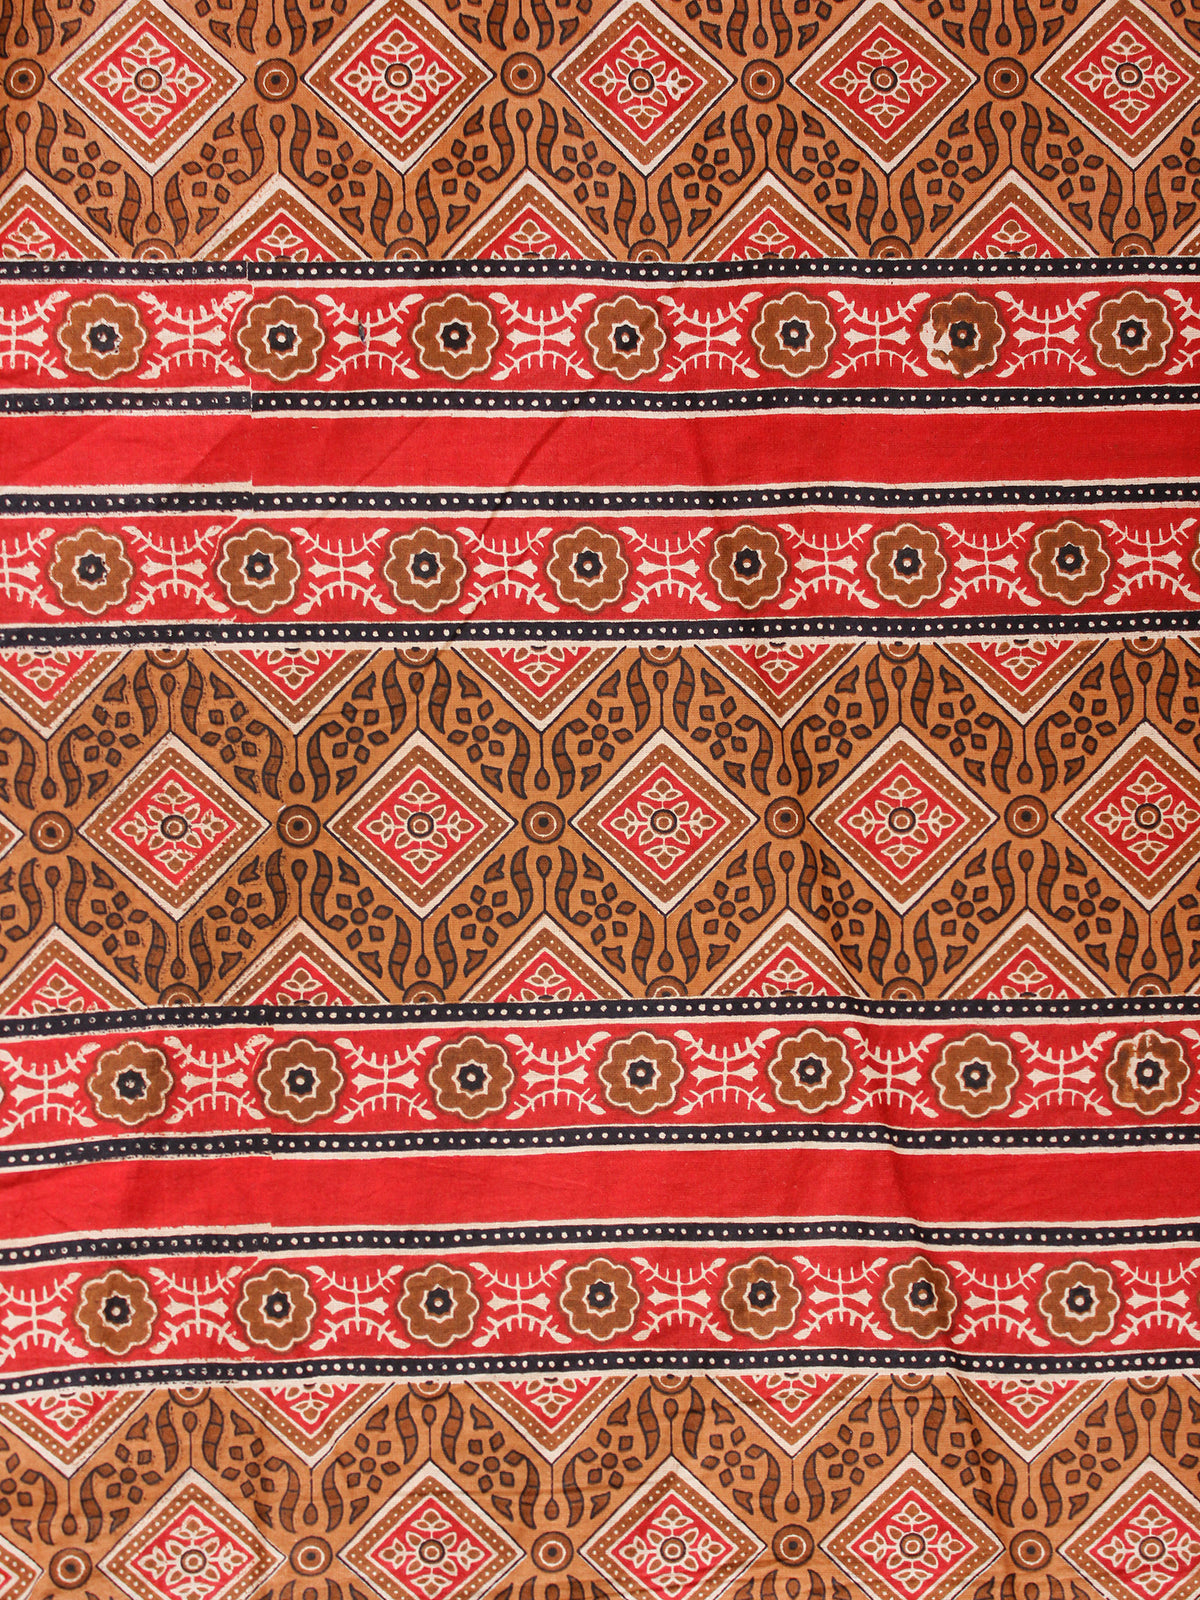 Brown Red Black Hand Block Printed Cotton Fabric Per Meter - F001F1874